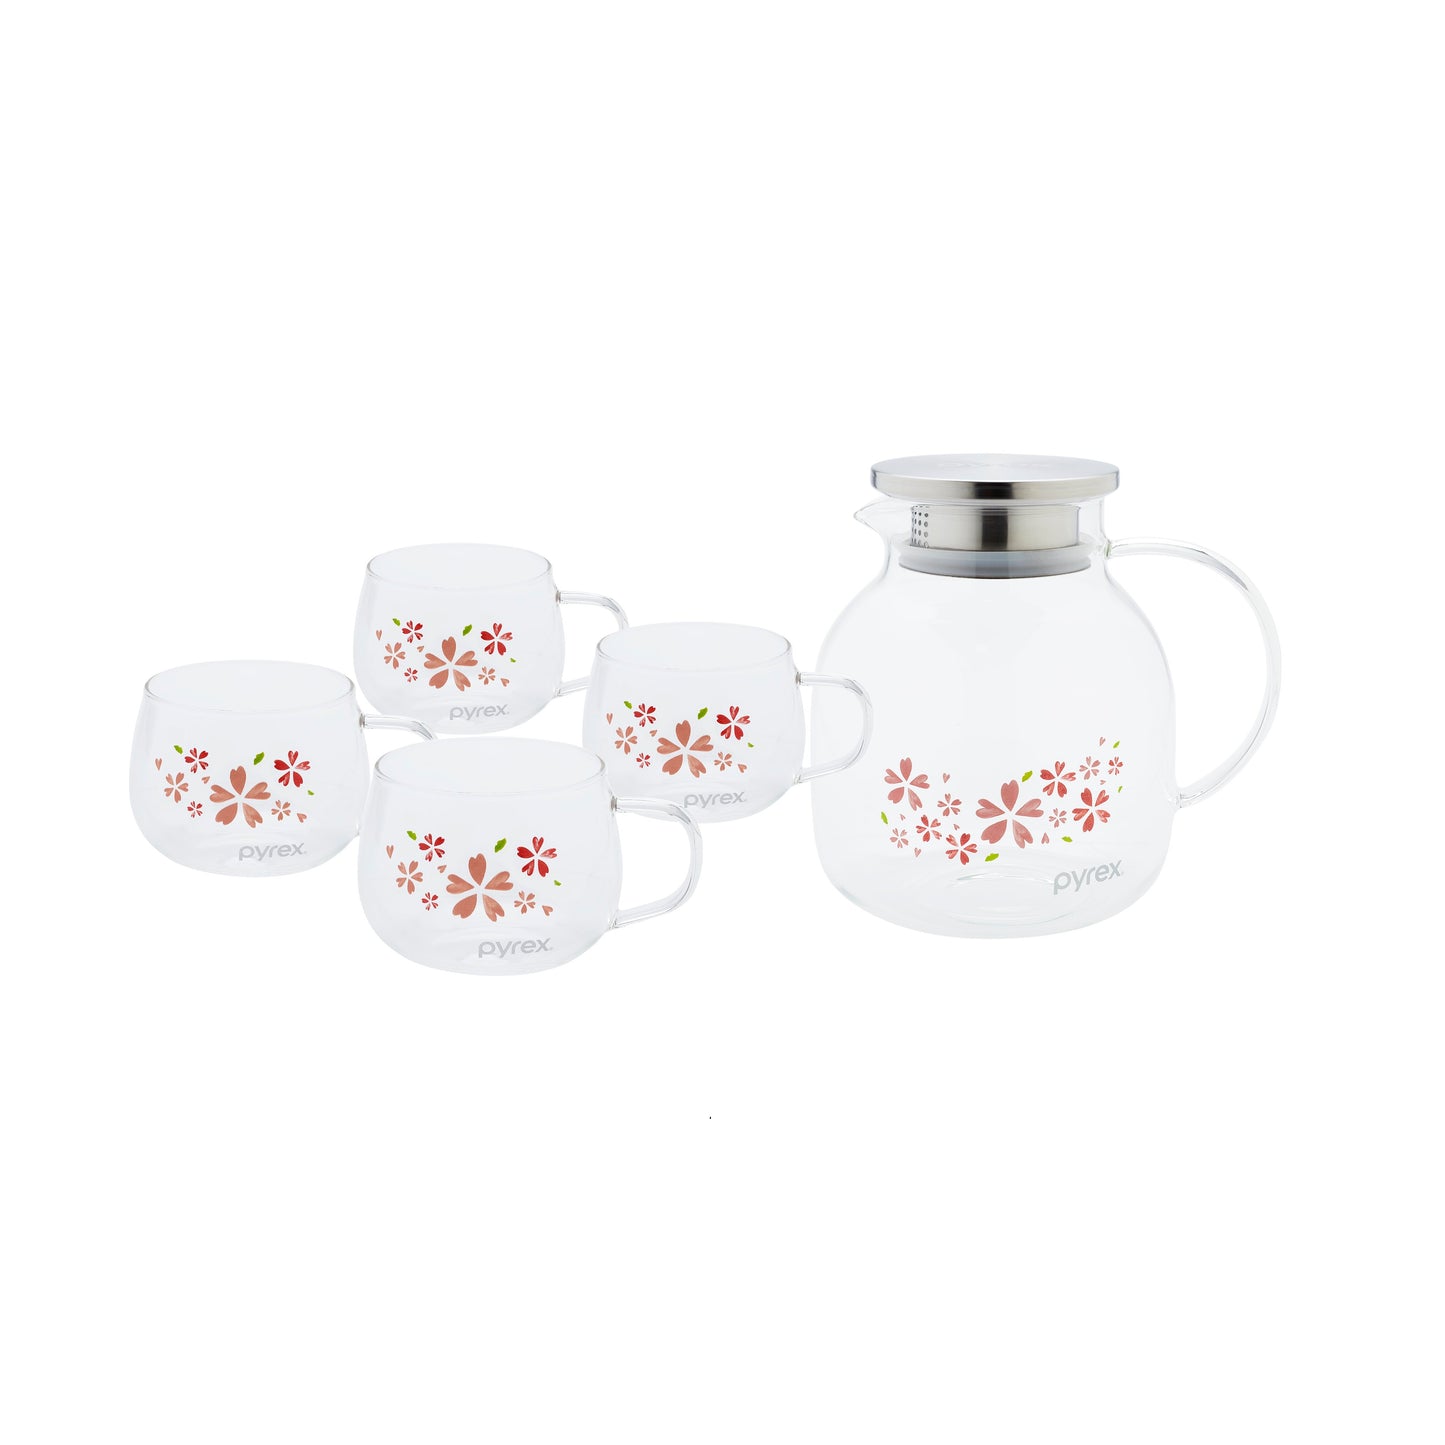 Pyrex Glass Jar 5pc Set - Hanami Blossom